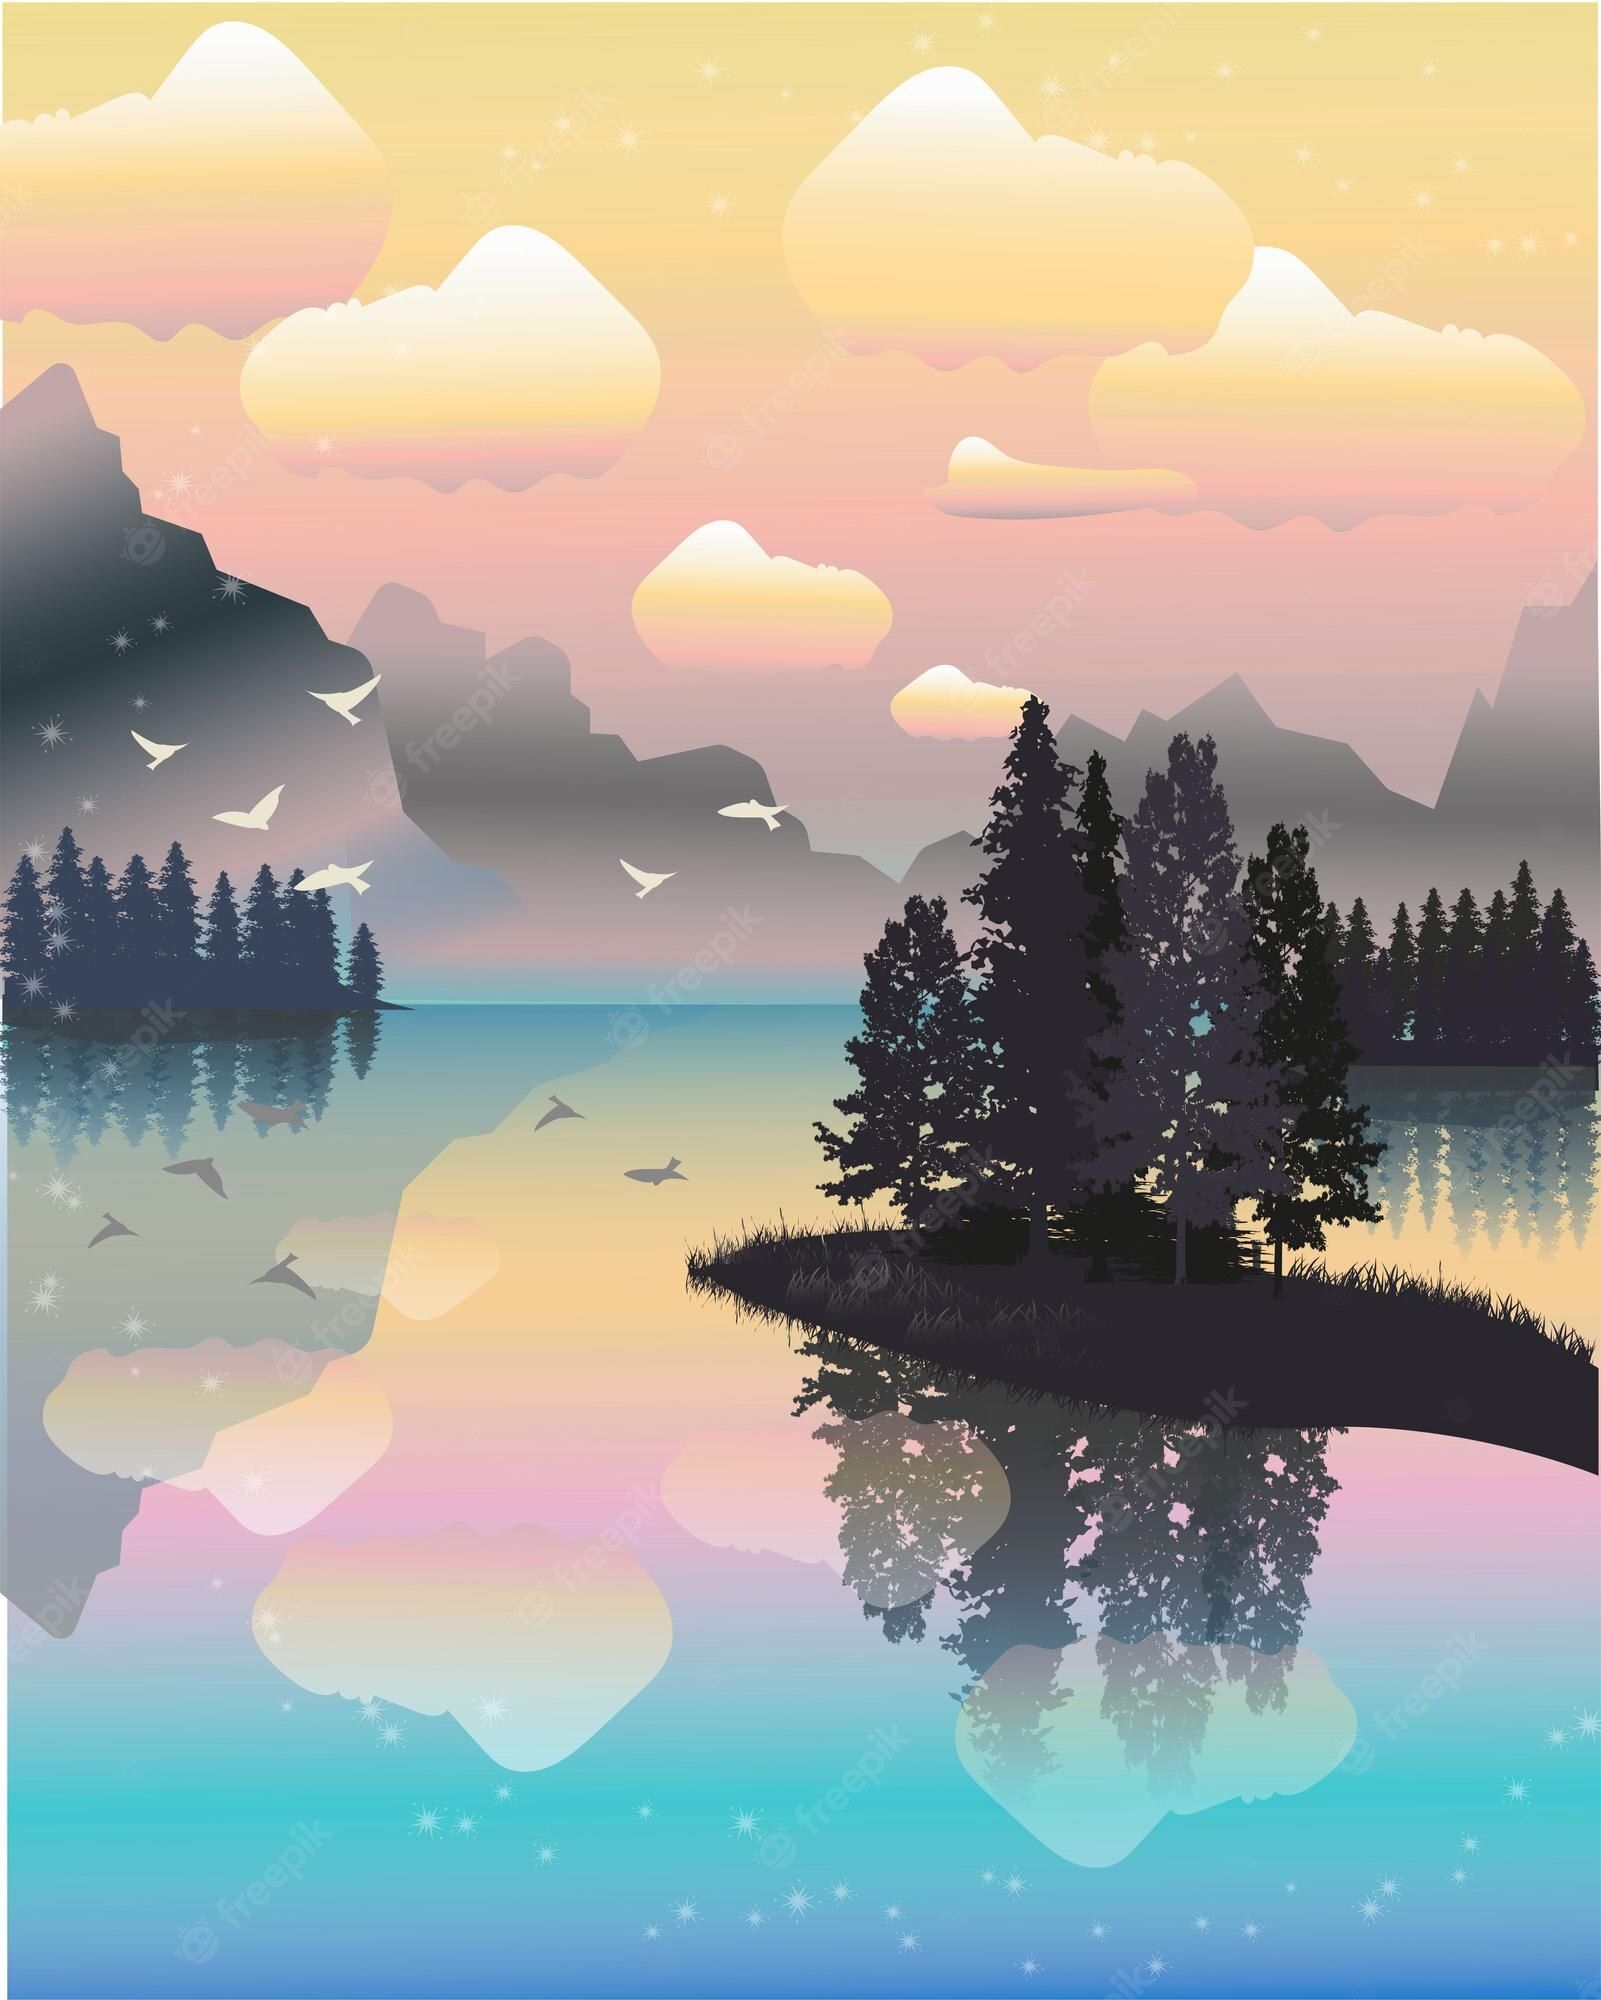 Lake Artwork Wallpaper Image